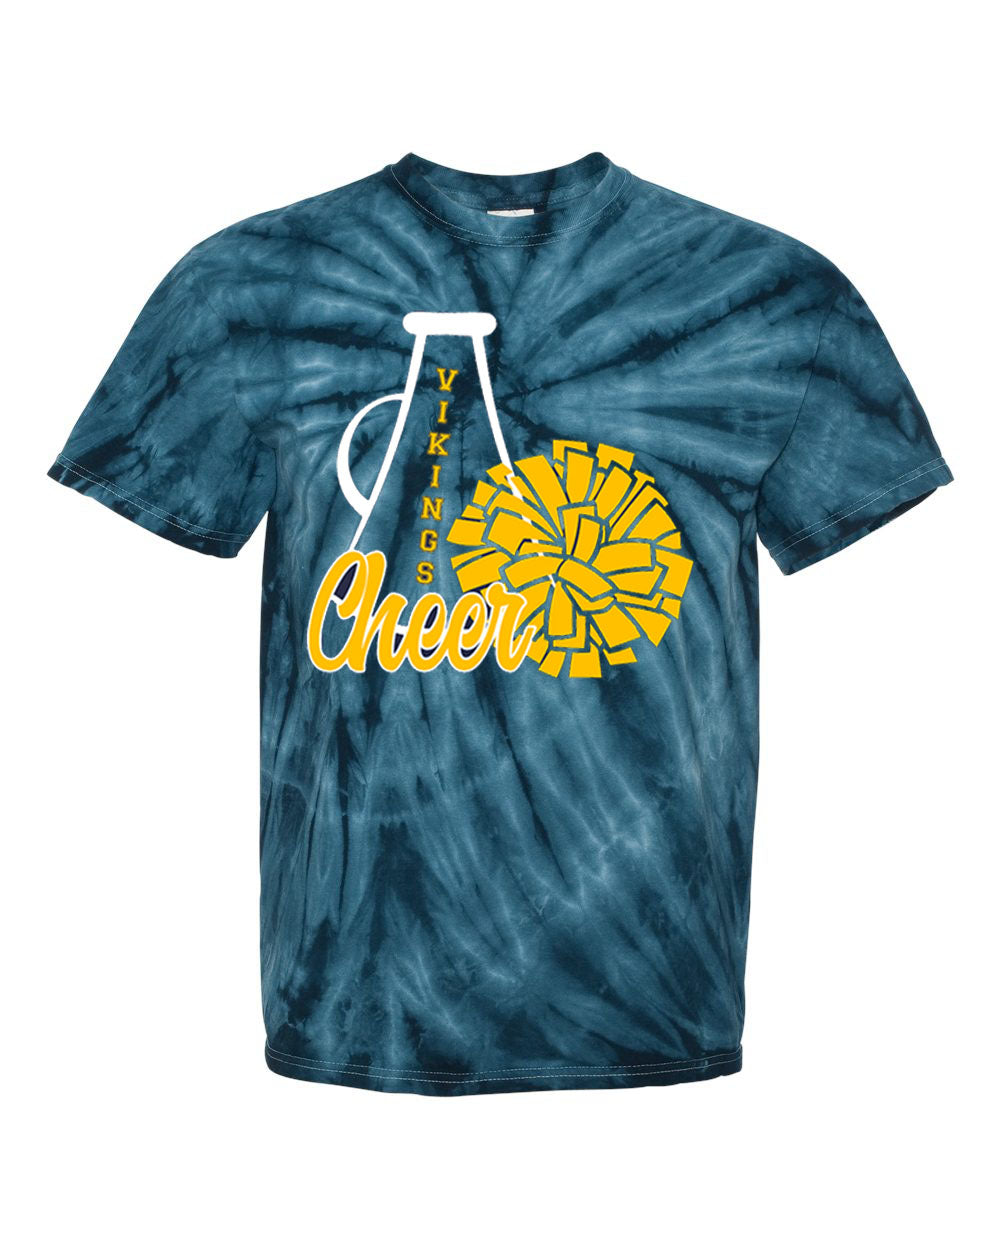 Vernon Vikings Cheer Tie Dye t-shirt Design 14